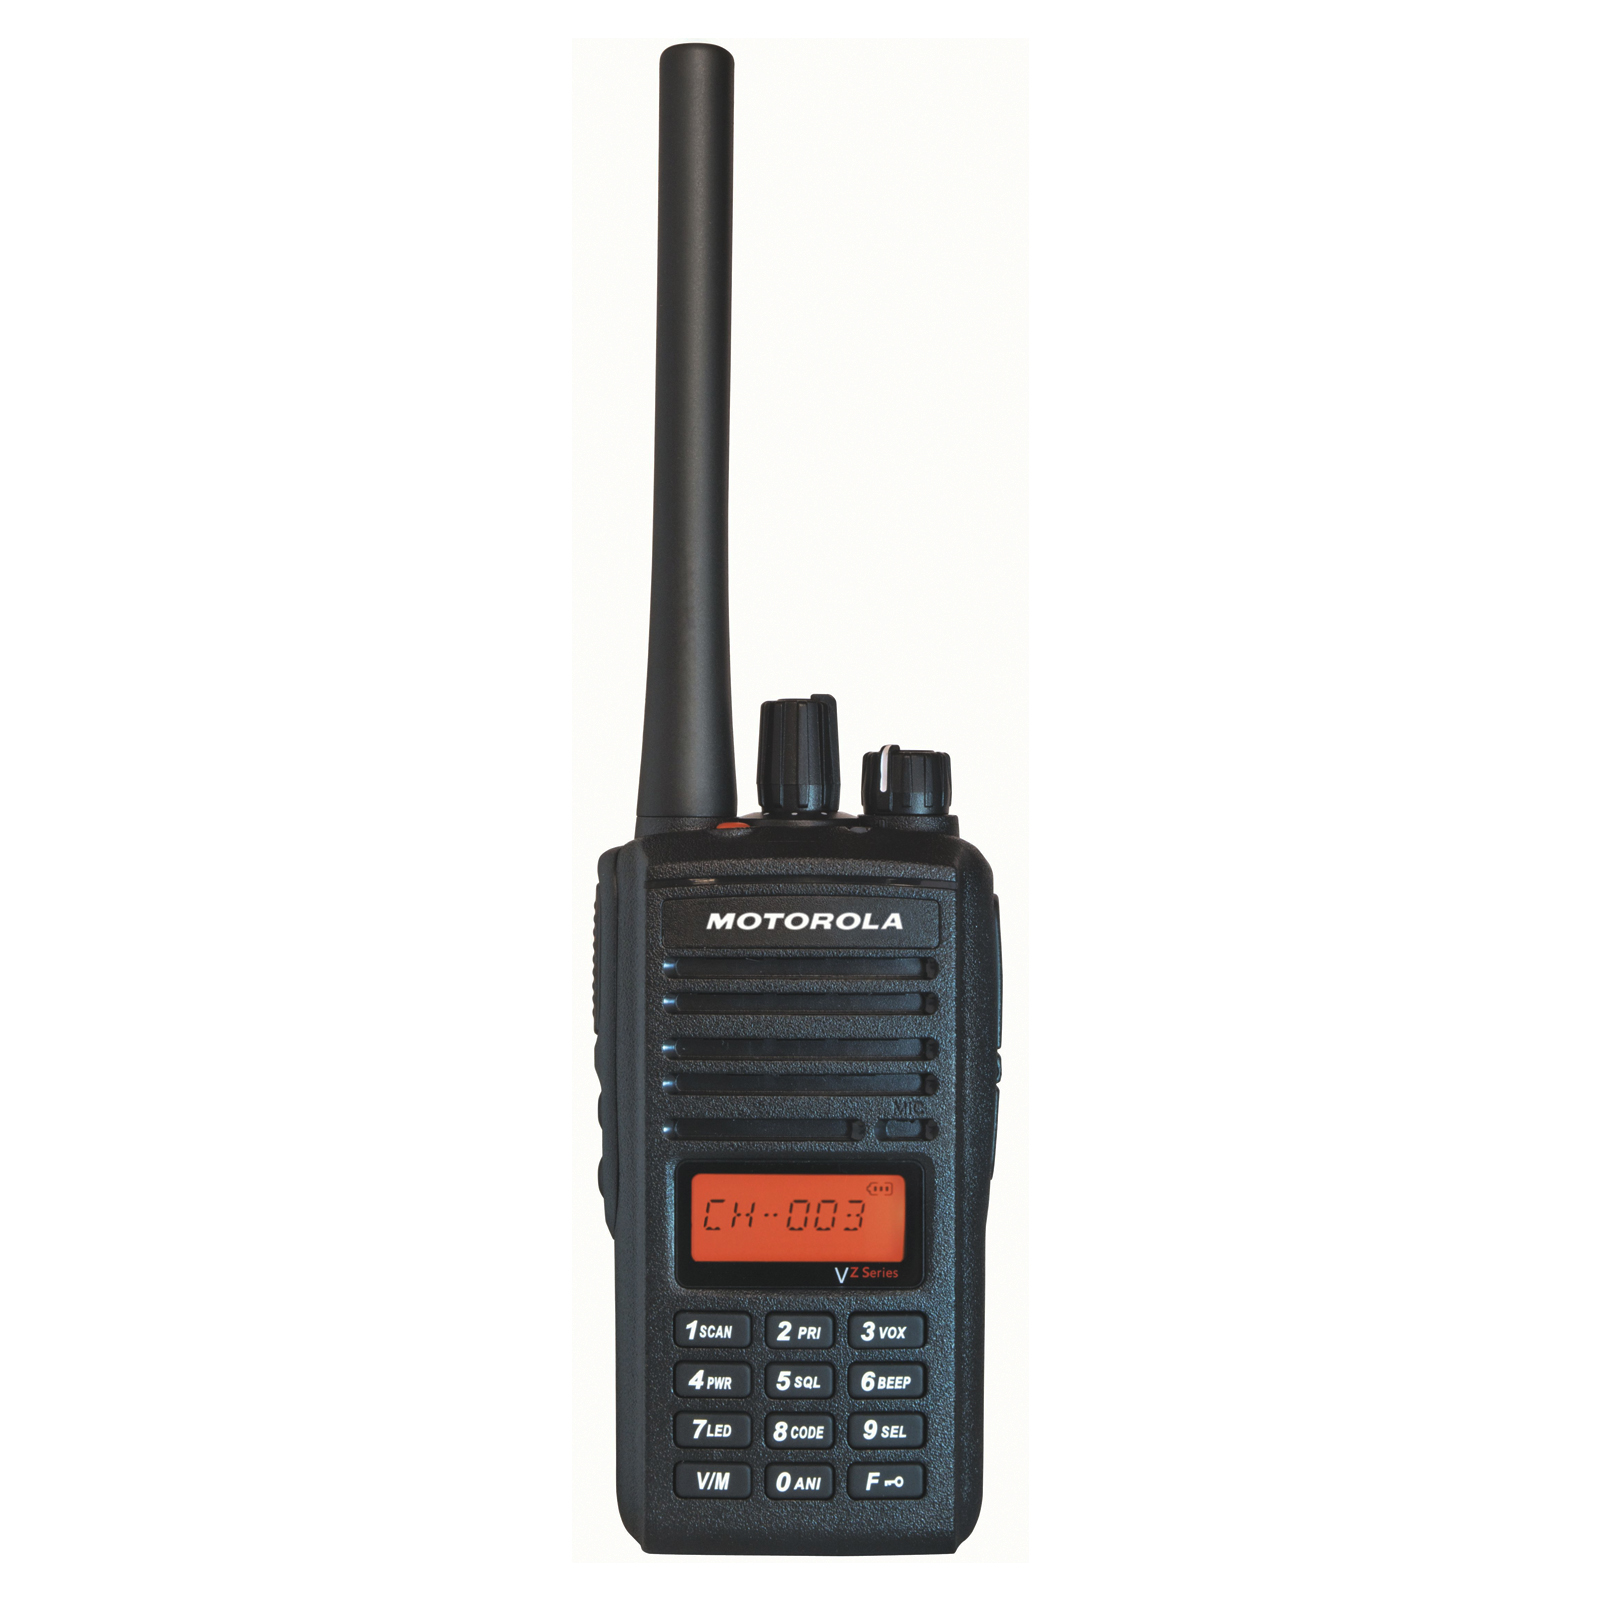 Telestar System Telecommunications Rome (Italy) Analogue Portable Radios VZ-20/28